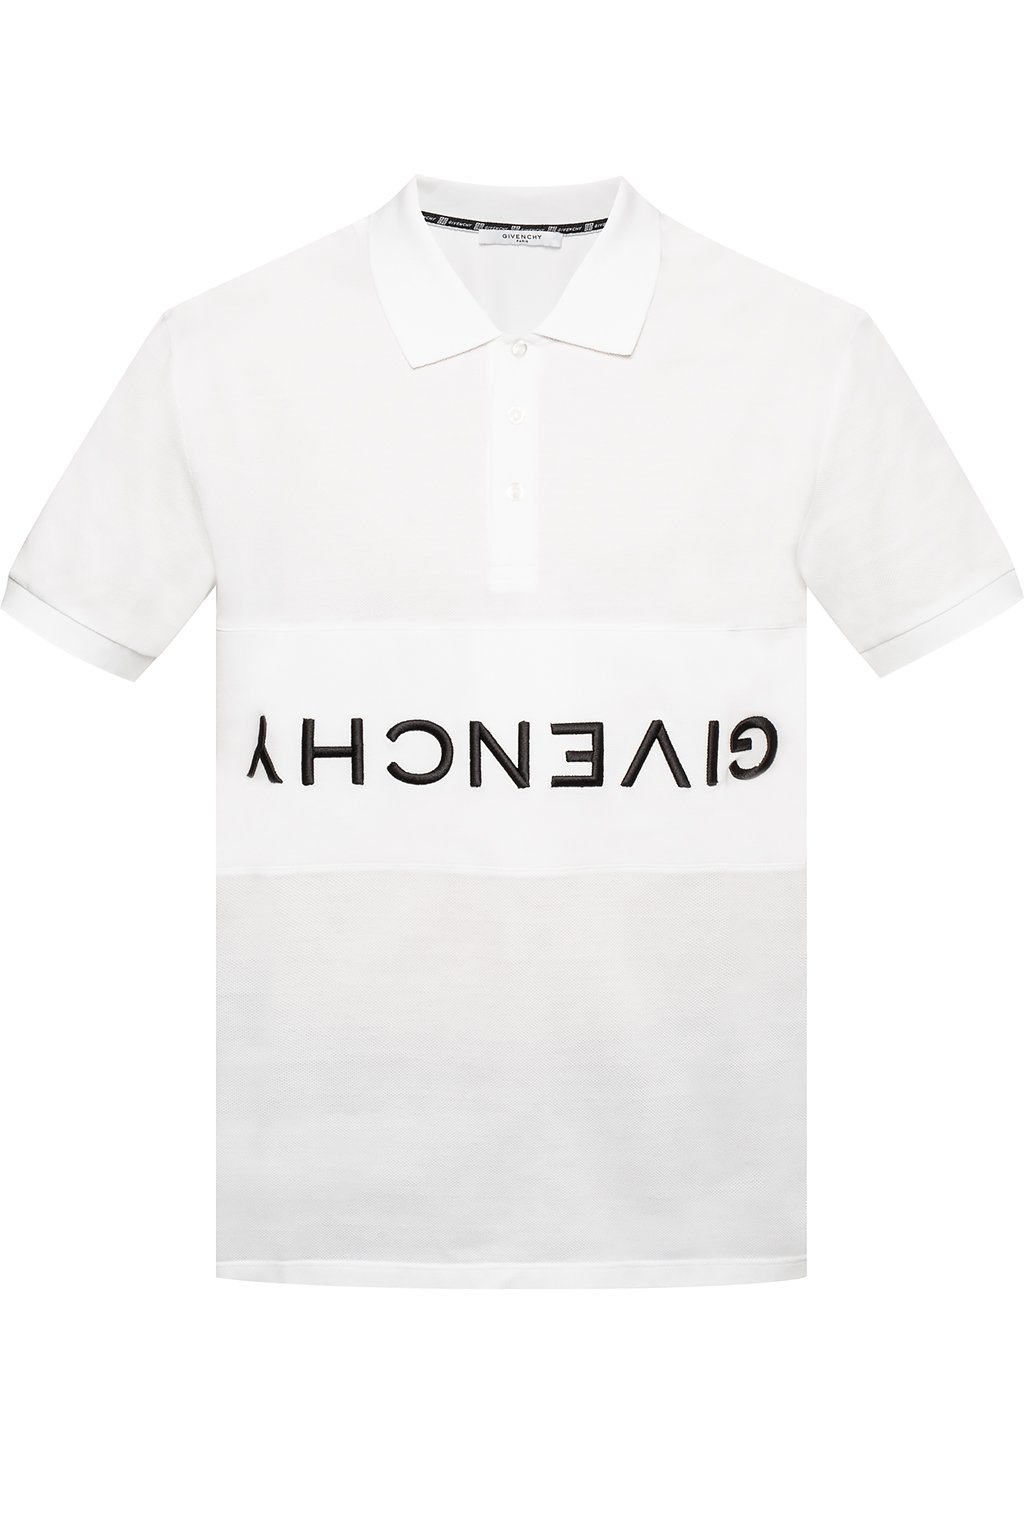 Givenchy Logo-embroidered polo shirt | Men's Clothing | Vitkac